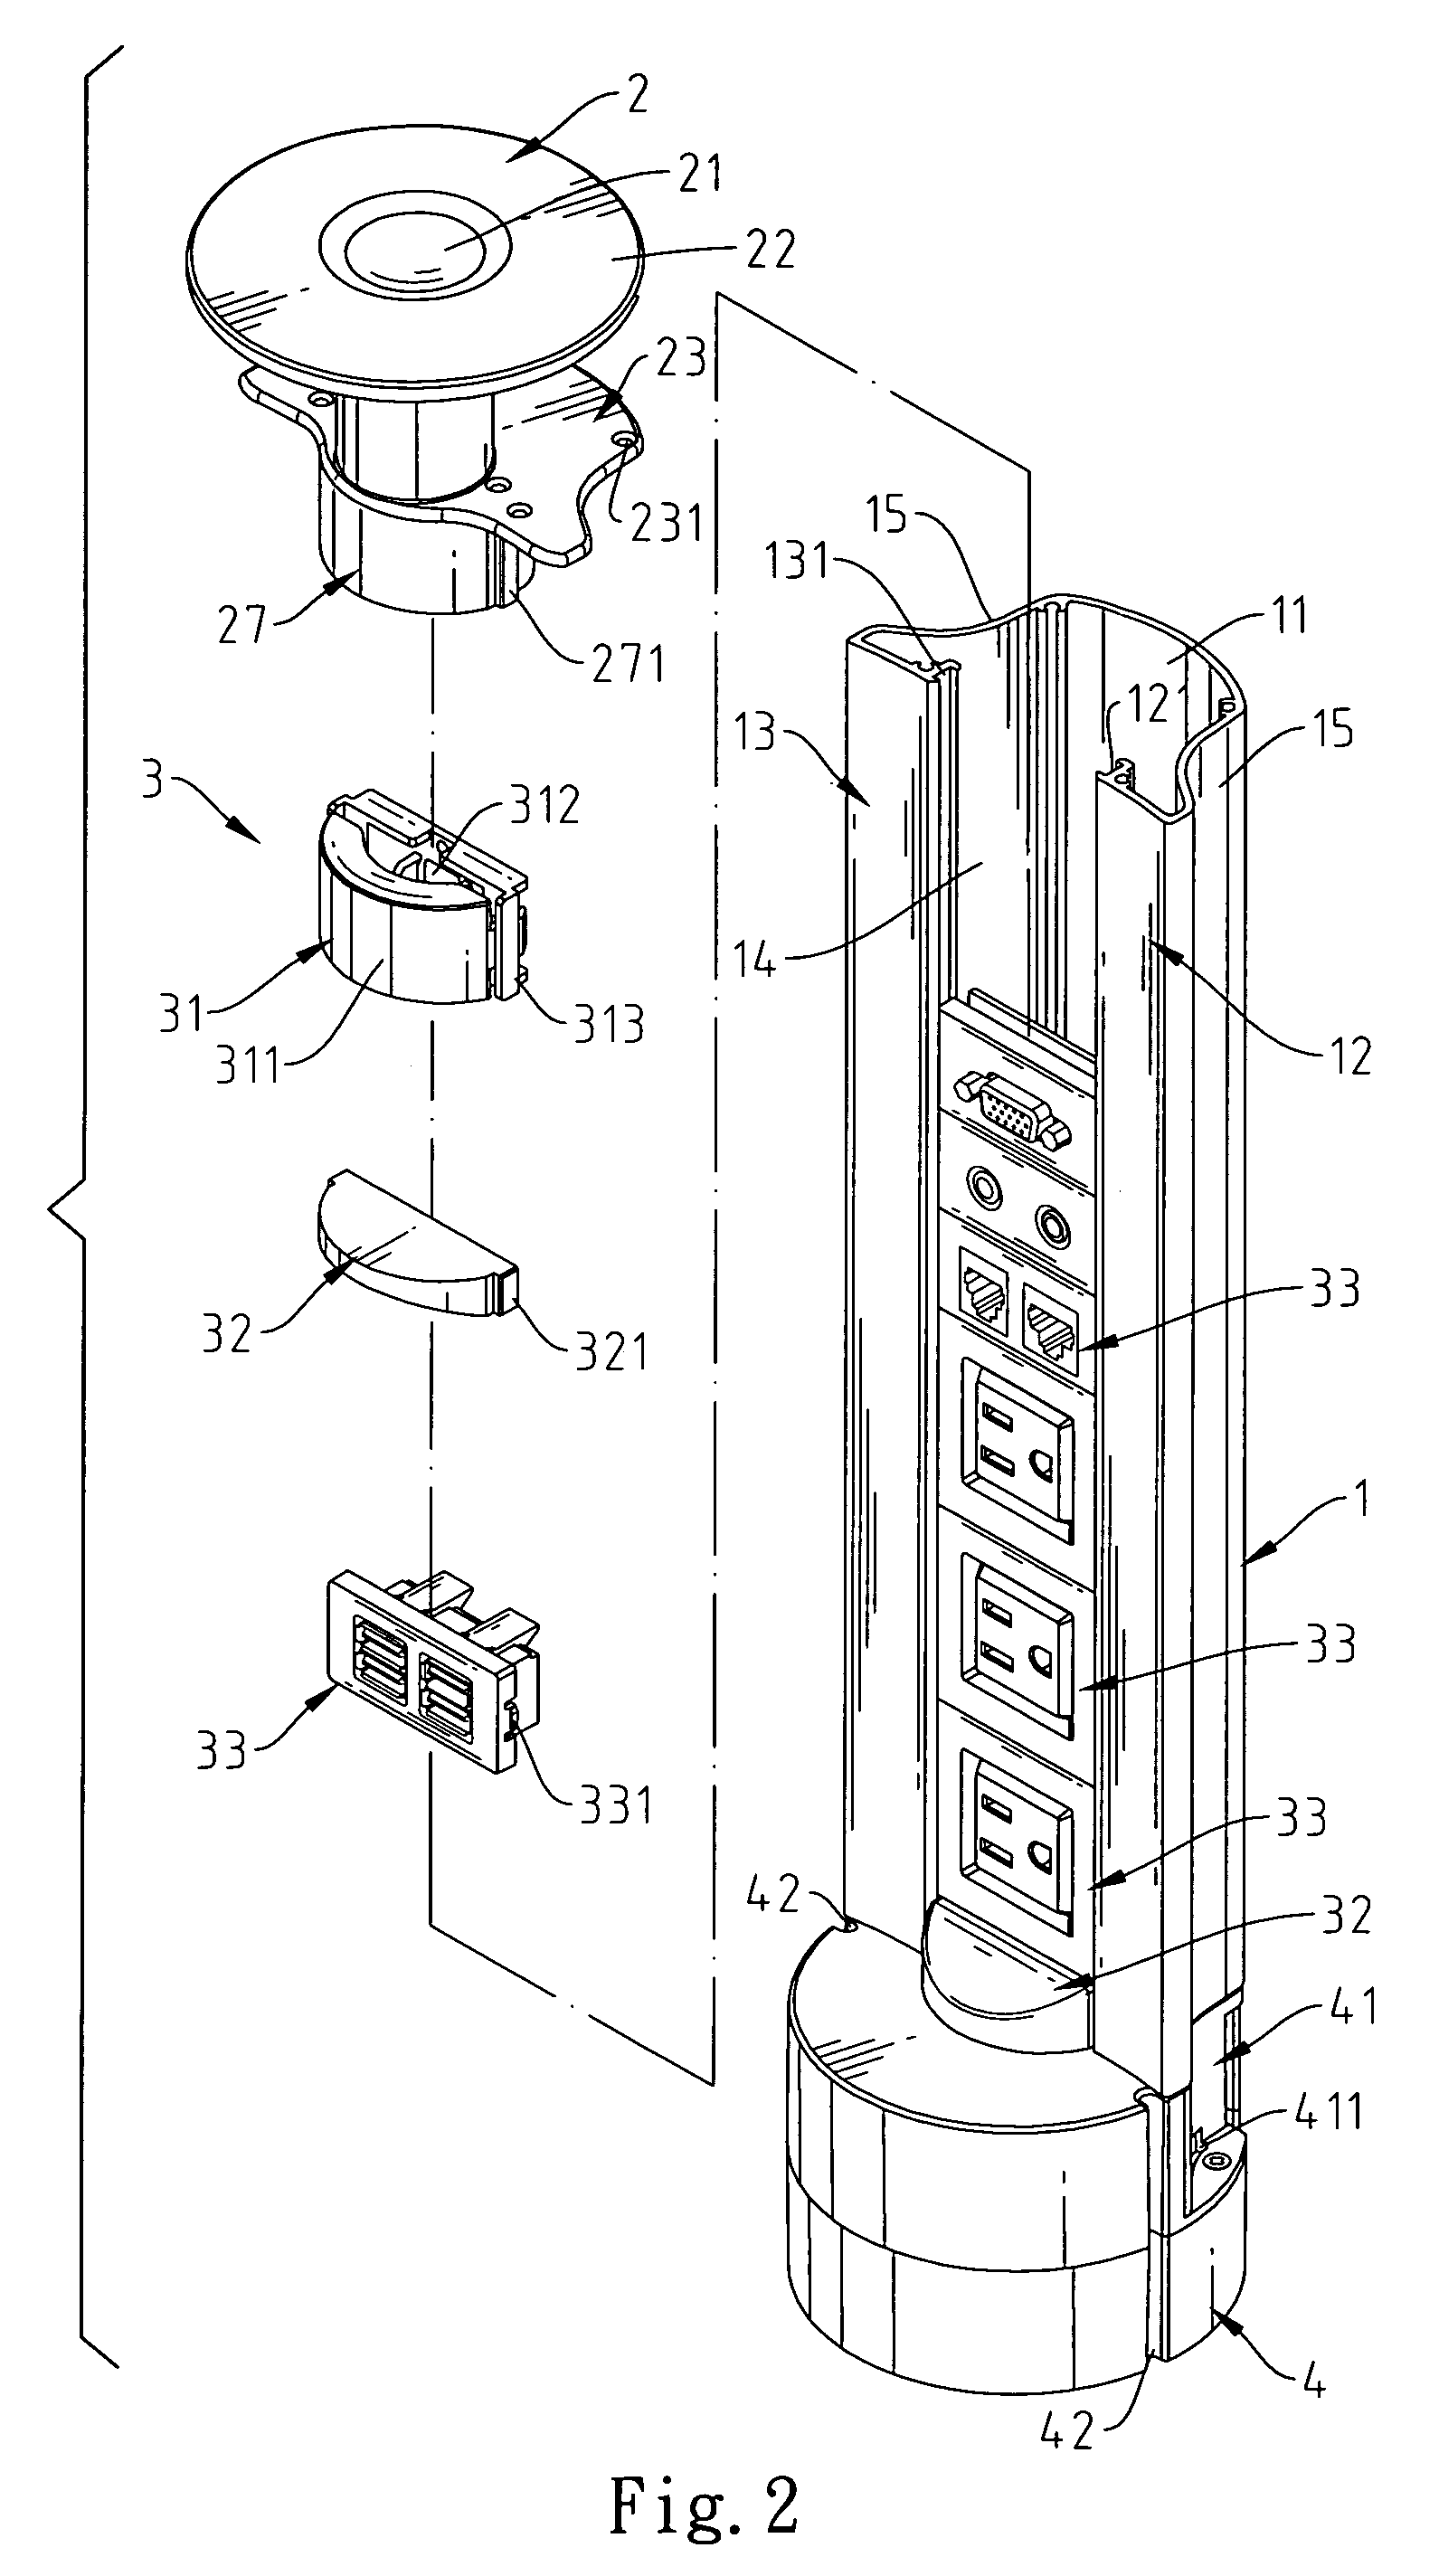 Modular integrated socket apparatus